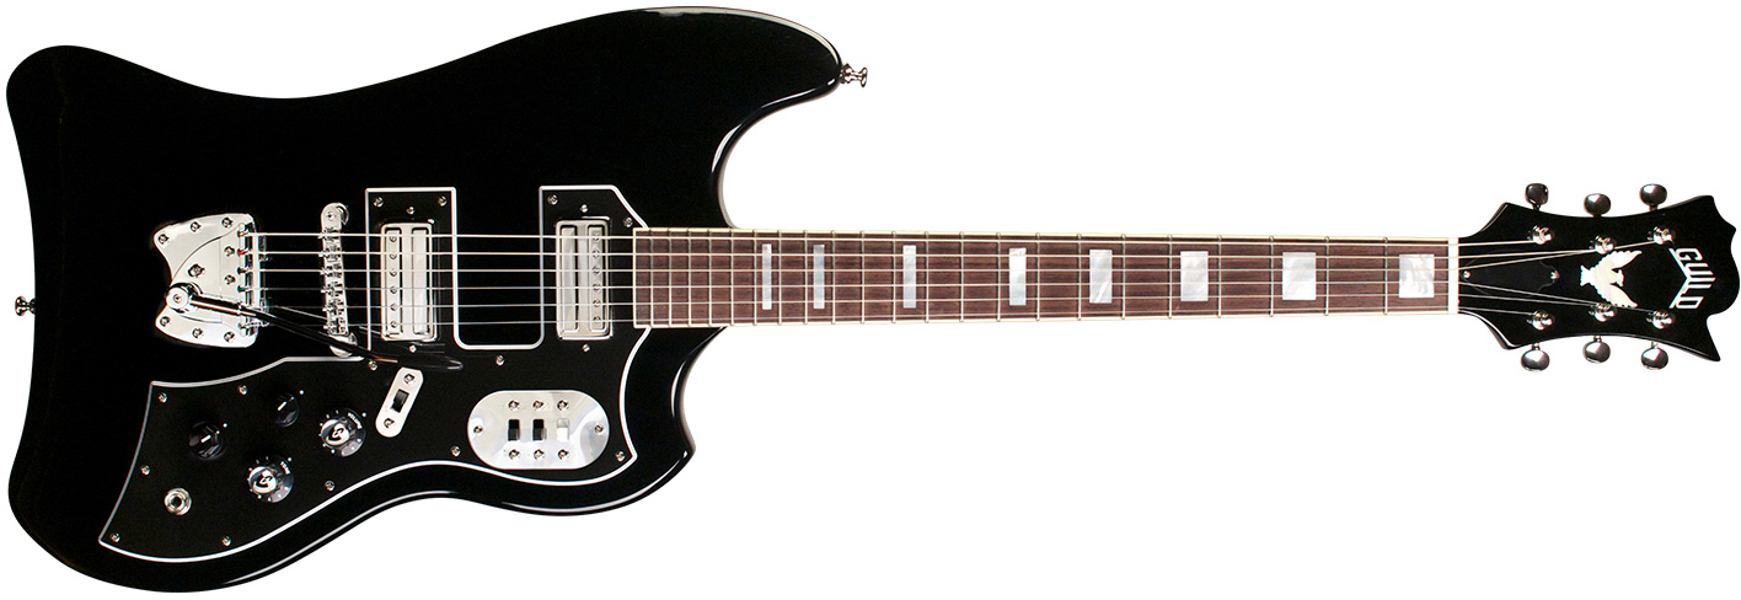 Guild S-200 T-bird - Noir - Guitarra electrica retro rock - Variation 1